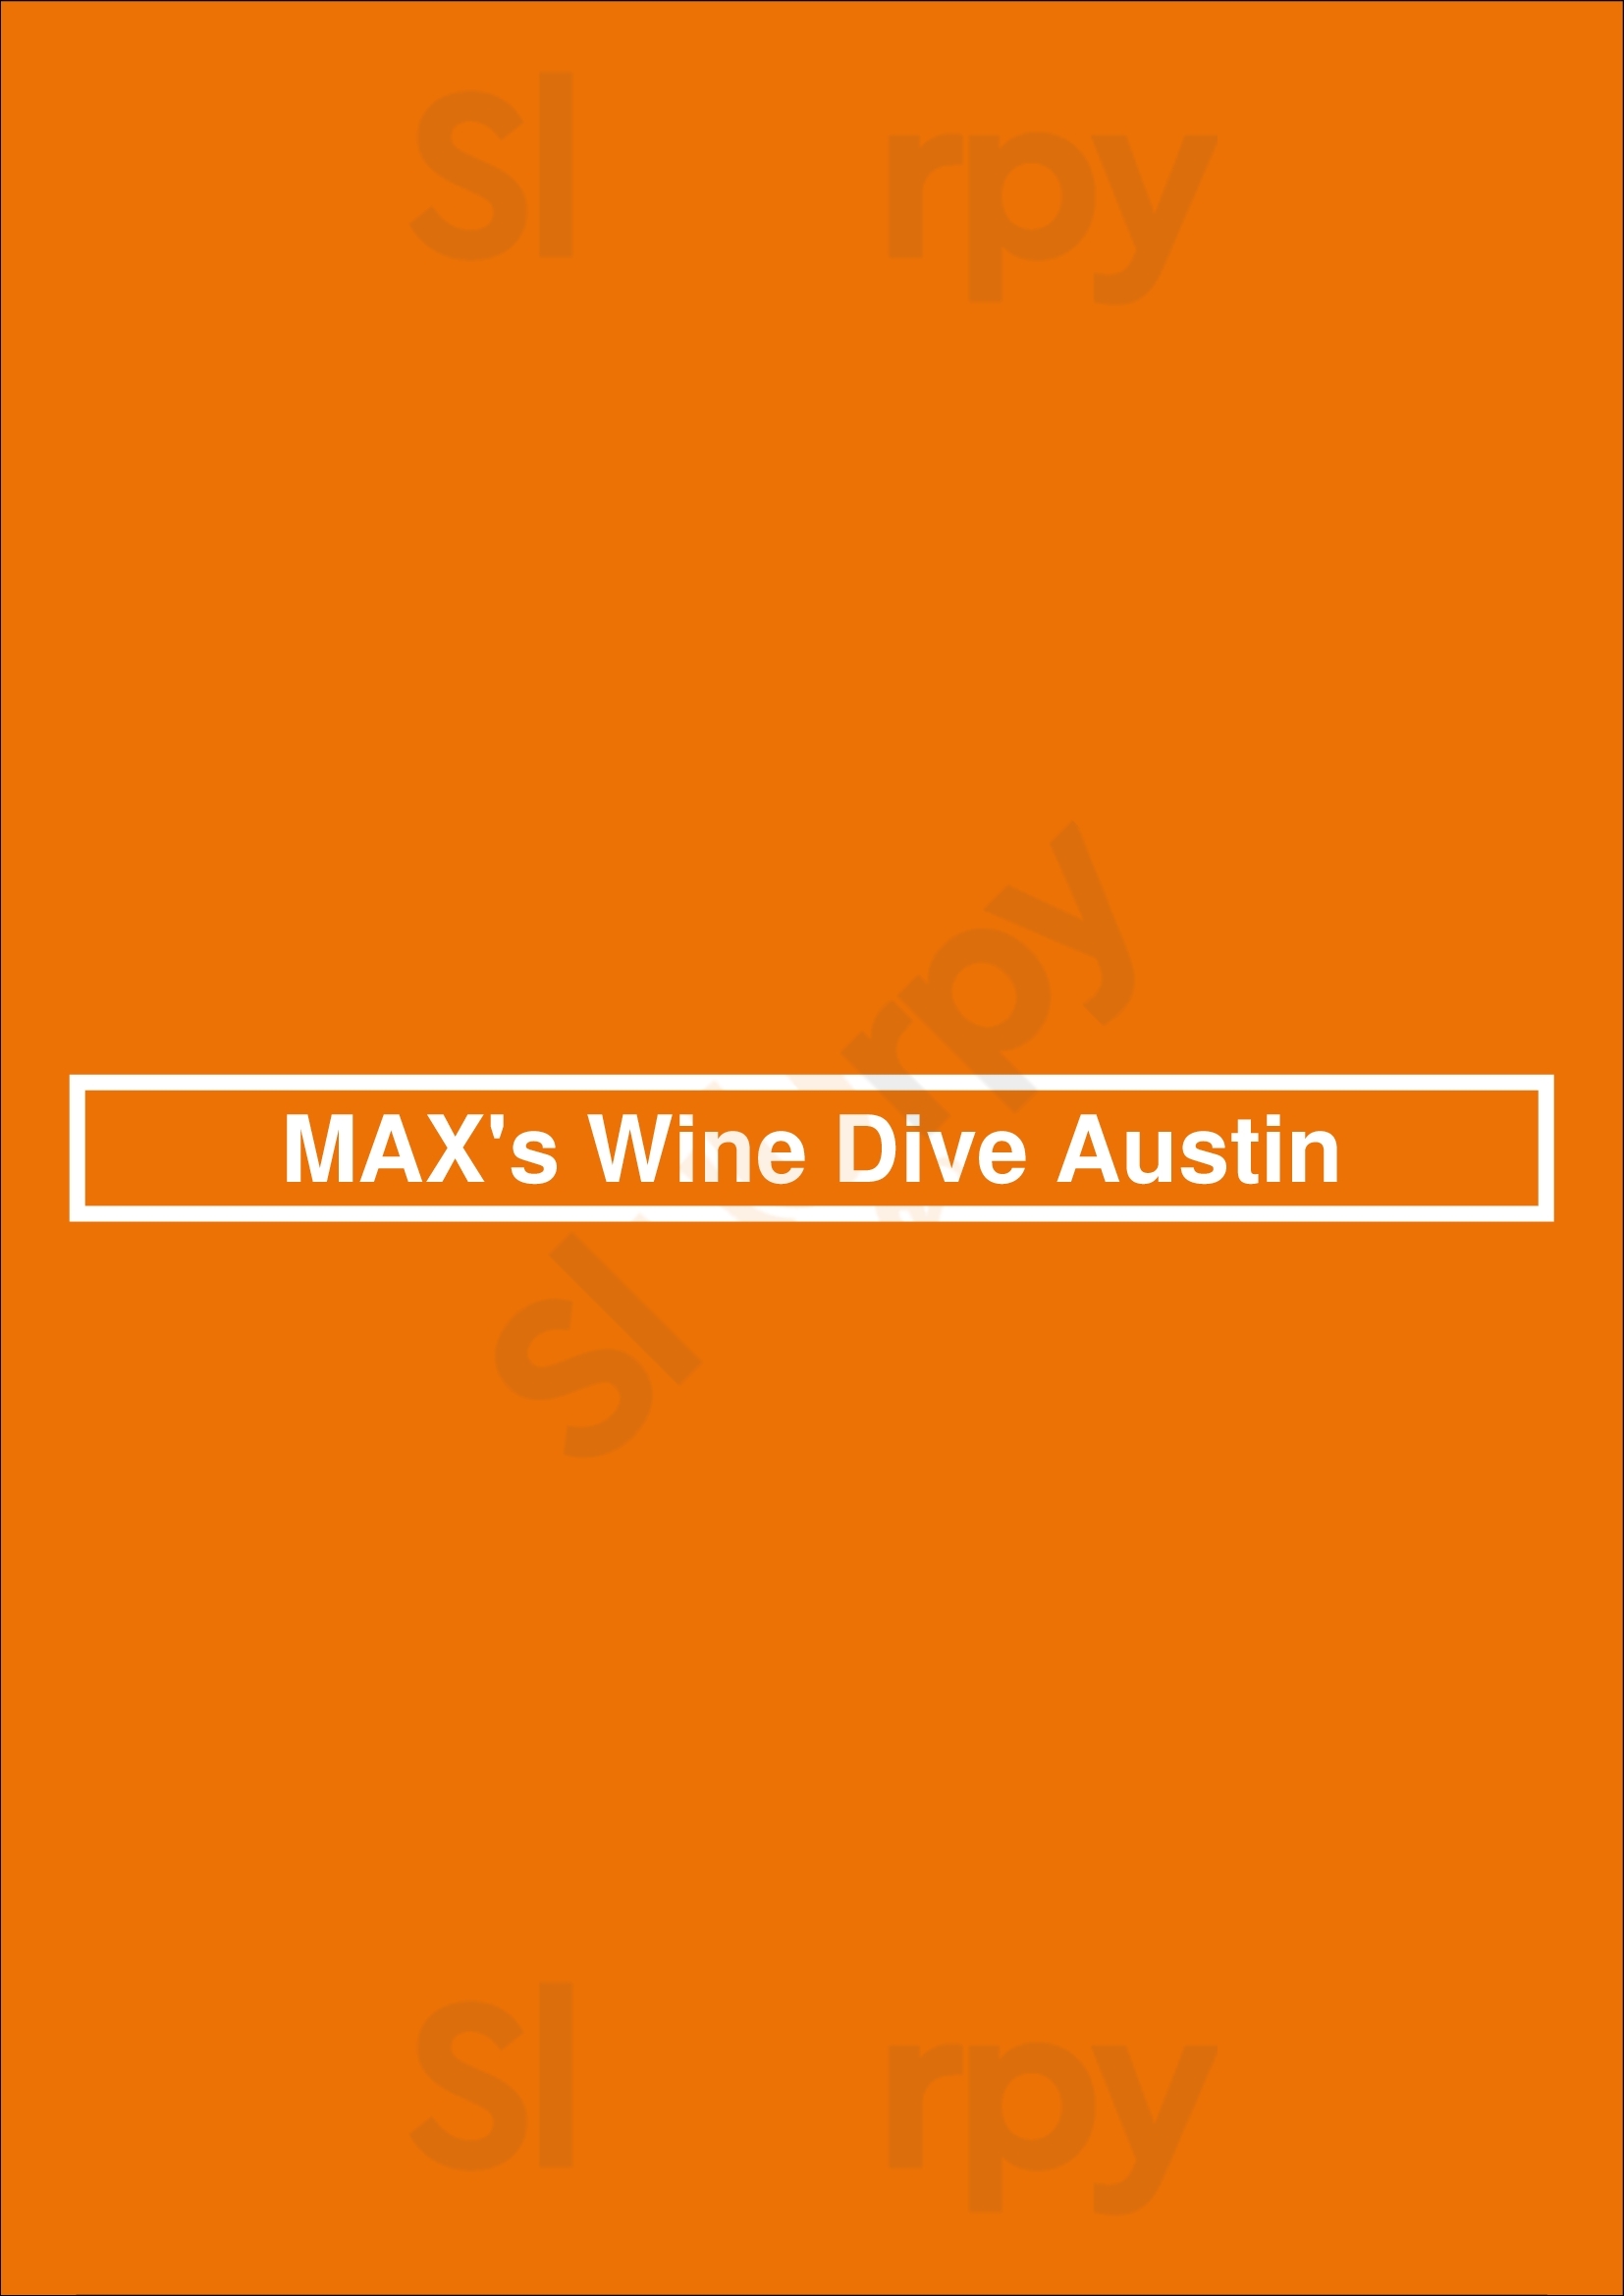 Max's Wine Dive Austin Austin Menu - 1